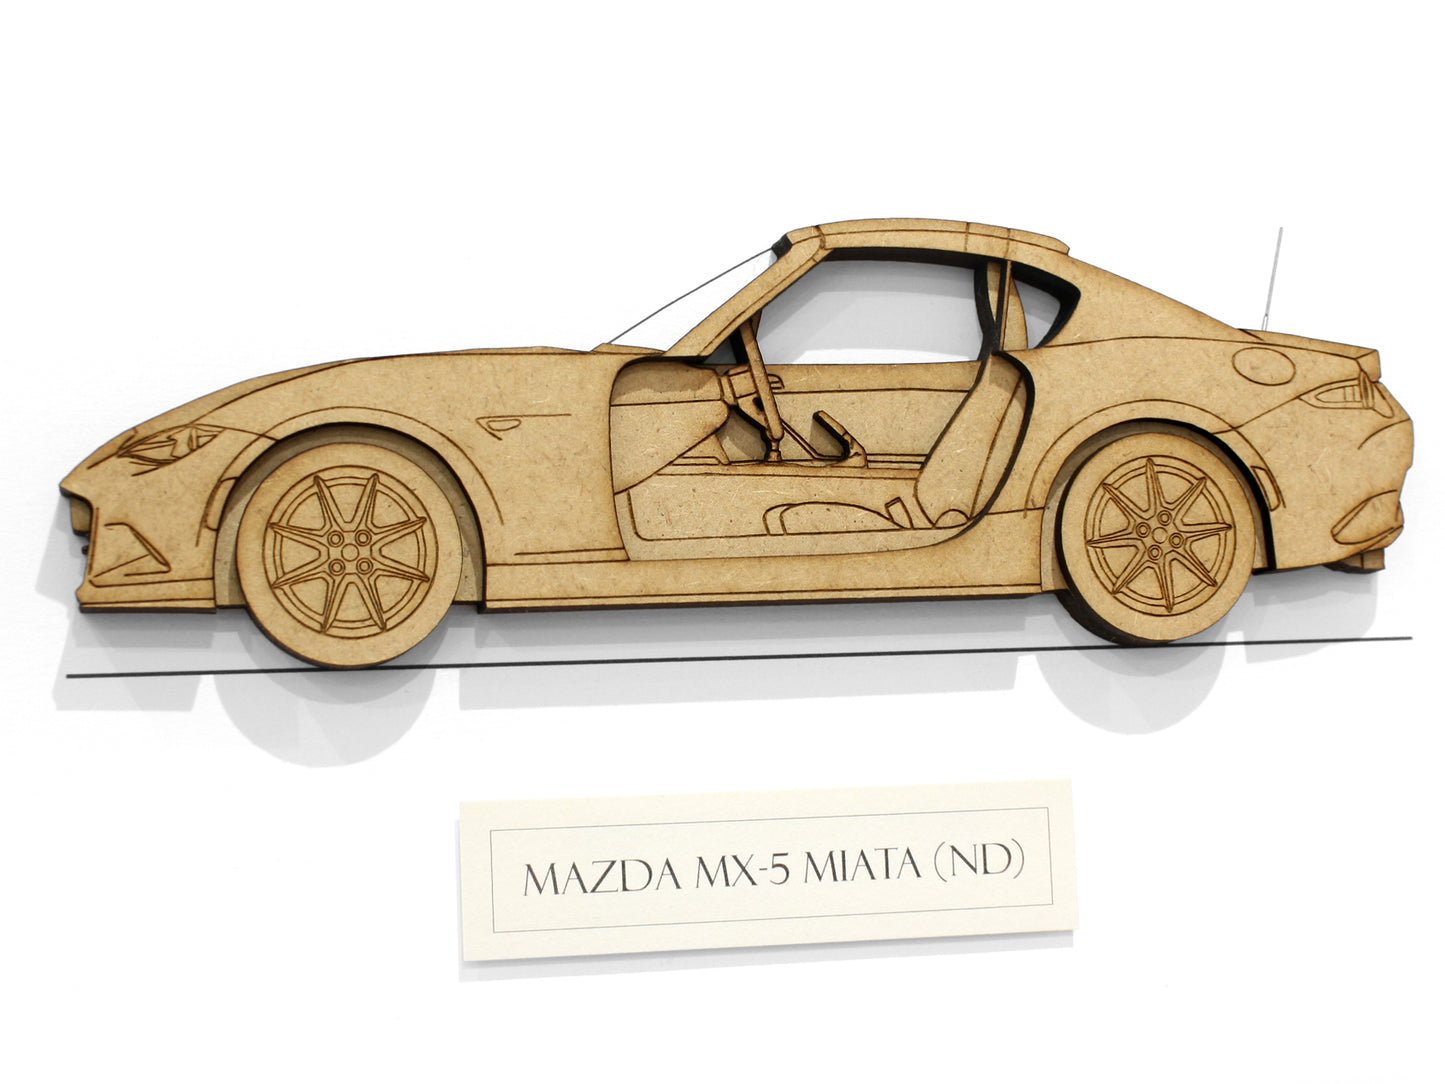 Mazda MX-5 Miata ND gifts